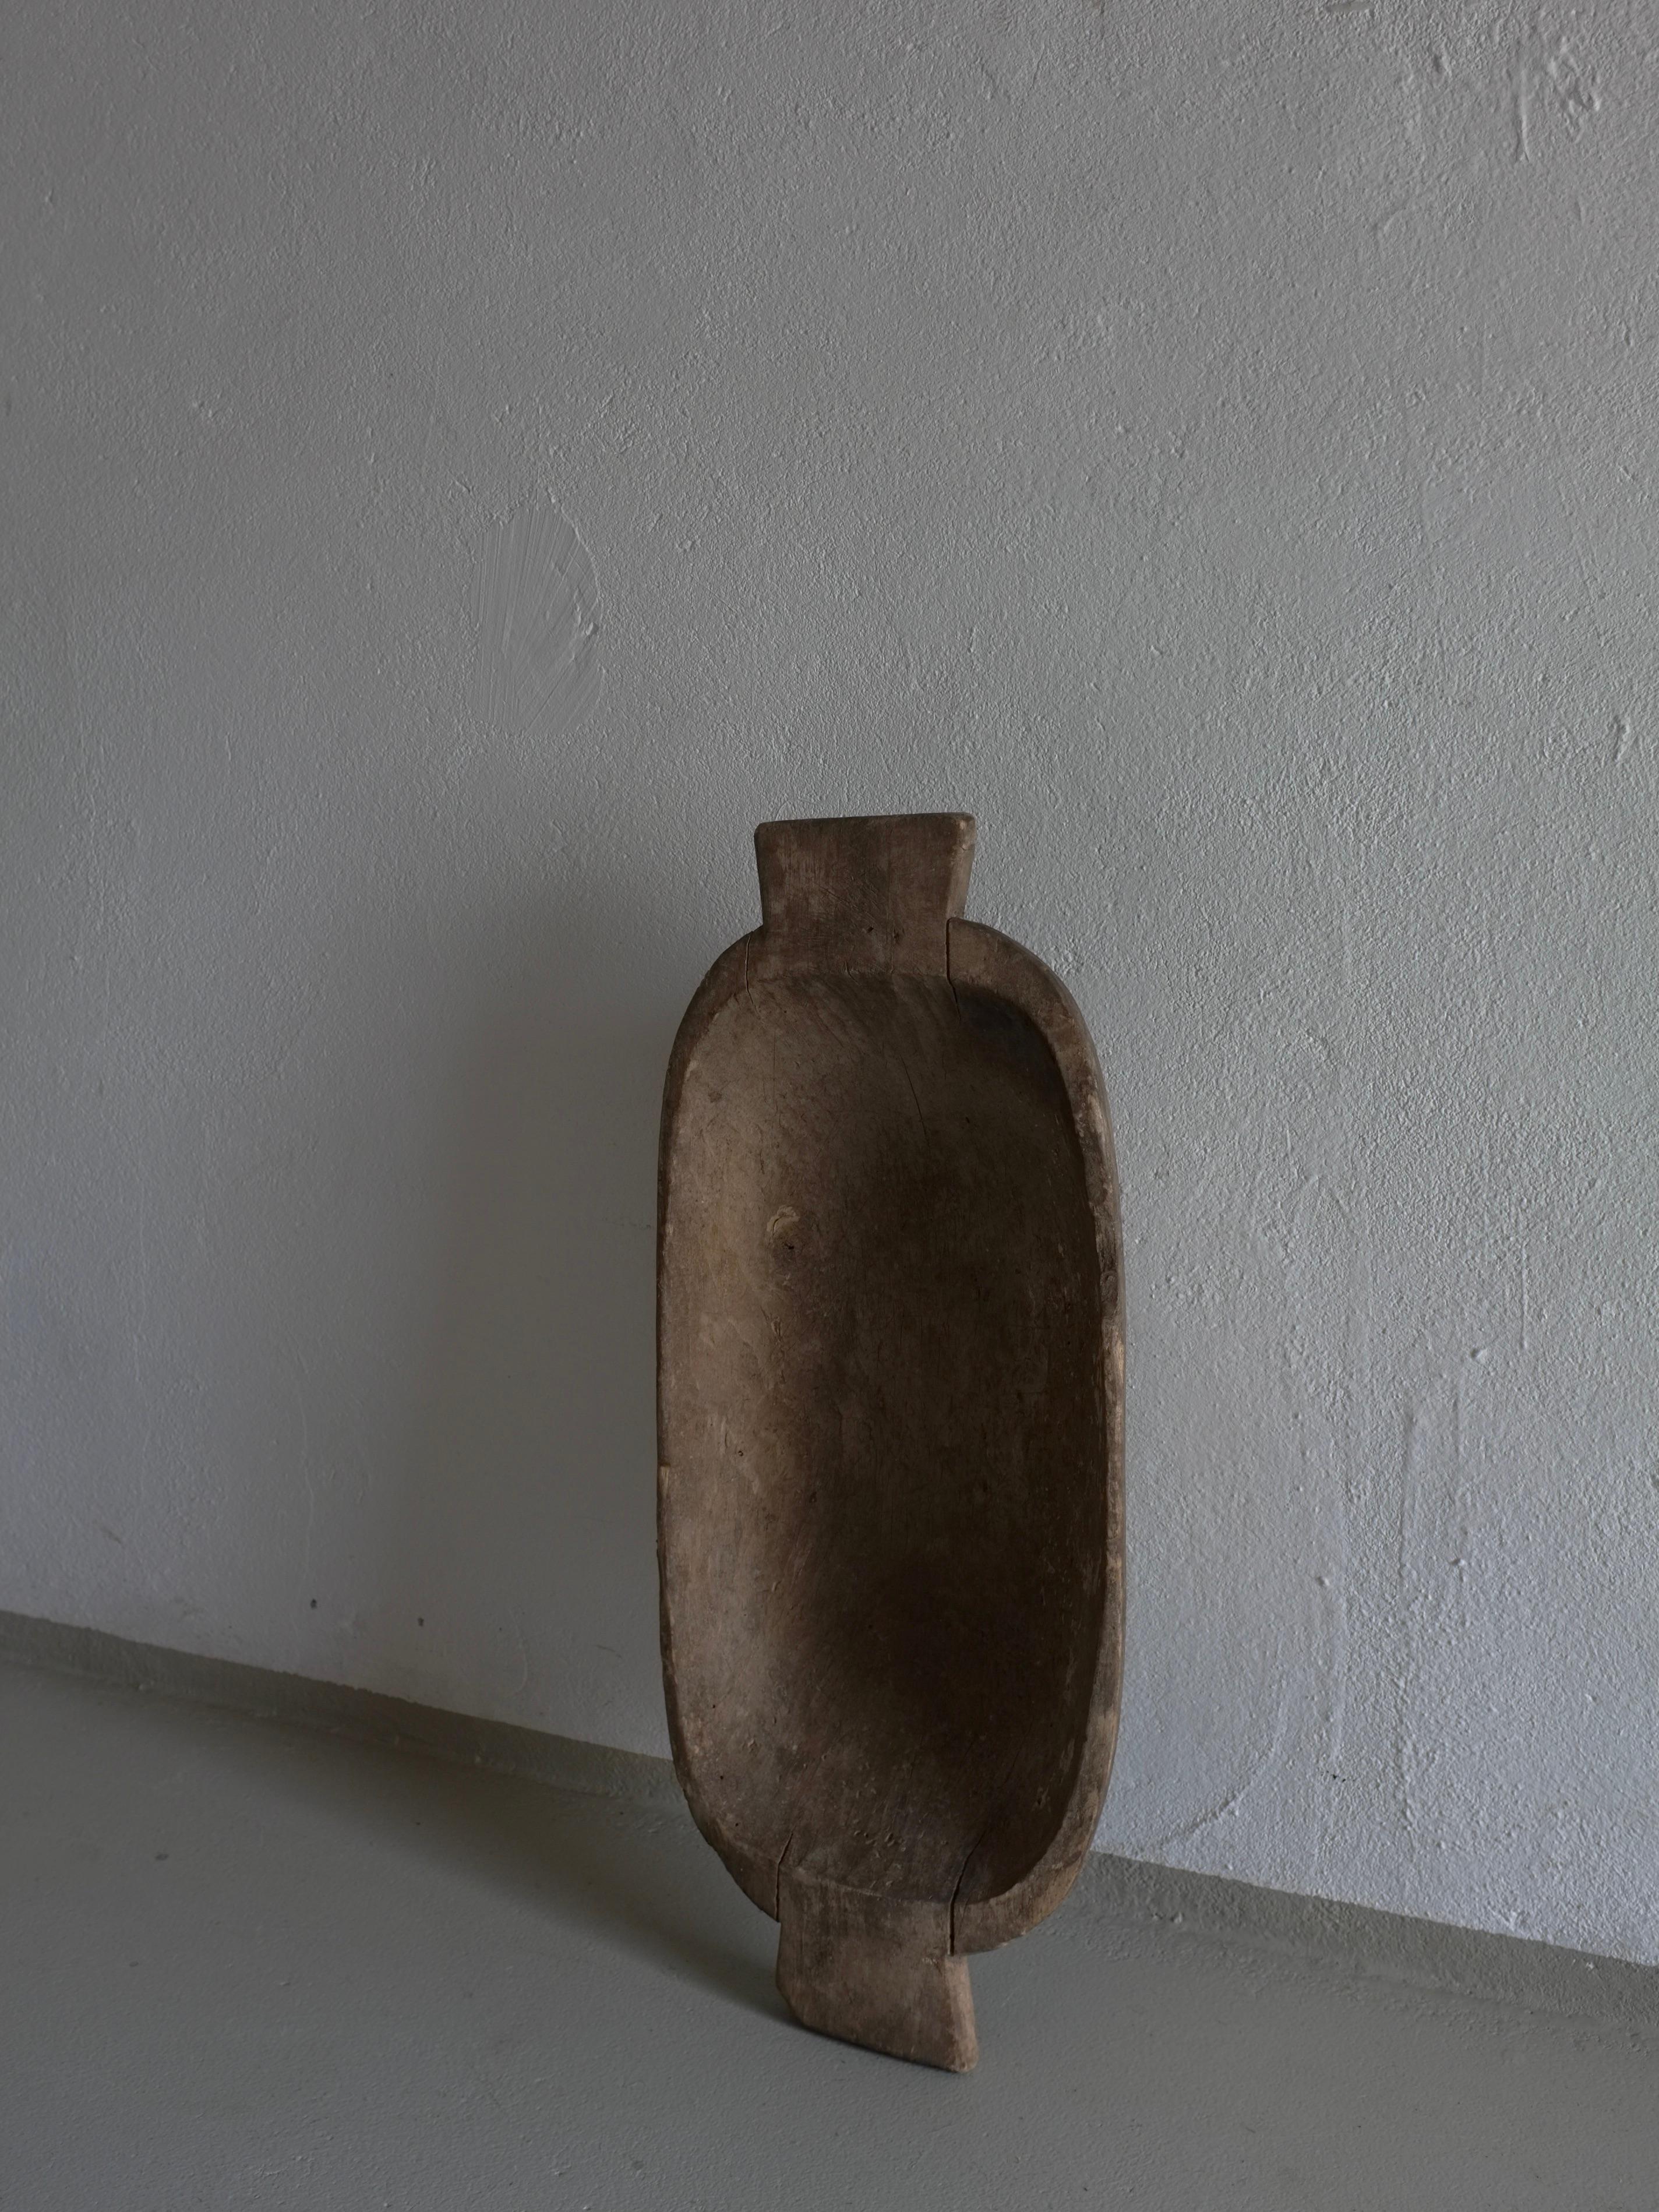 Antique primitive carved wooden bowl (#1) with a beautiful patina.

Additional information:
Origin: Latvia
Dimensions: W 65 cm x D 28 cm x H 10.5 cm 